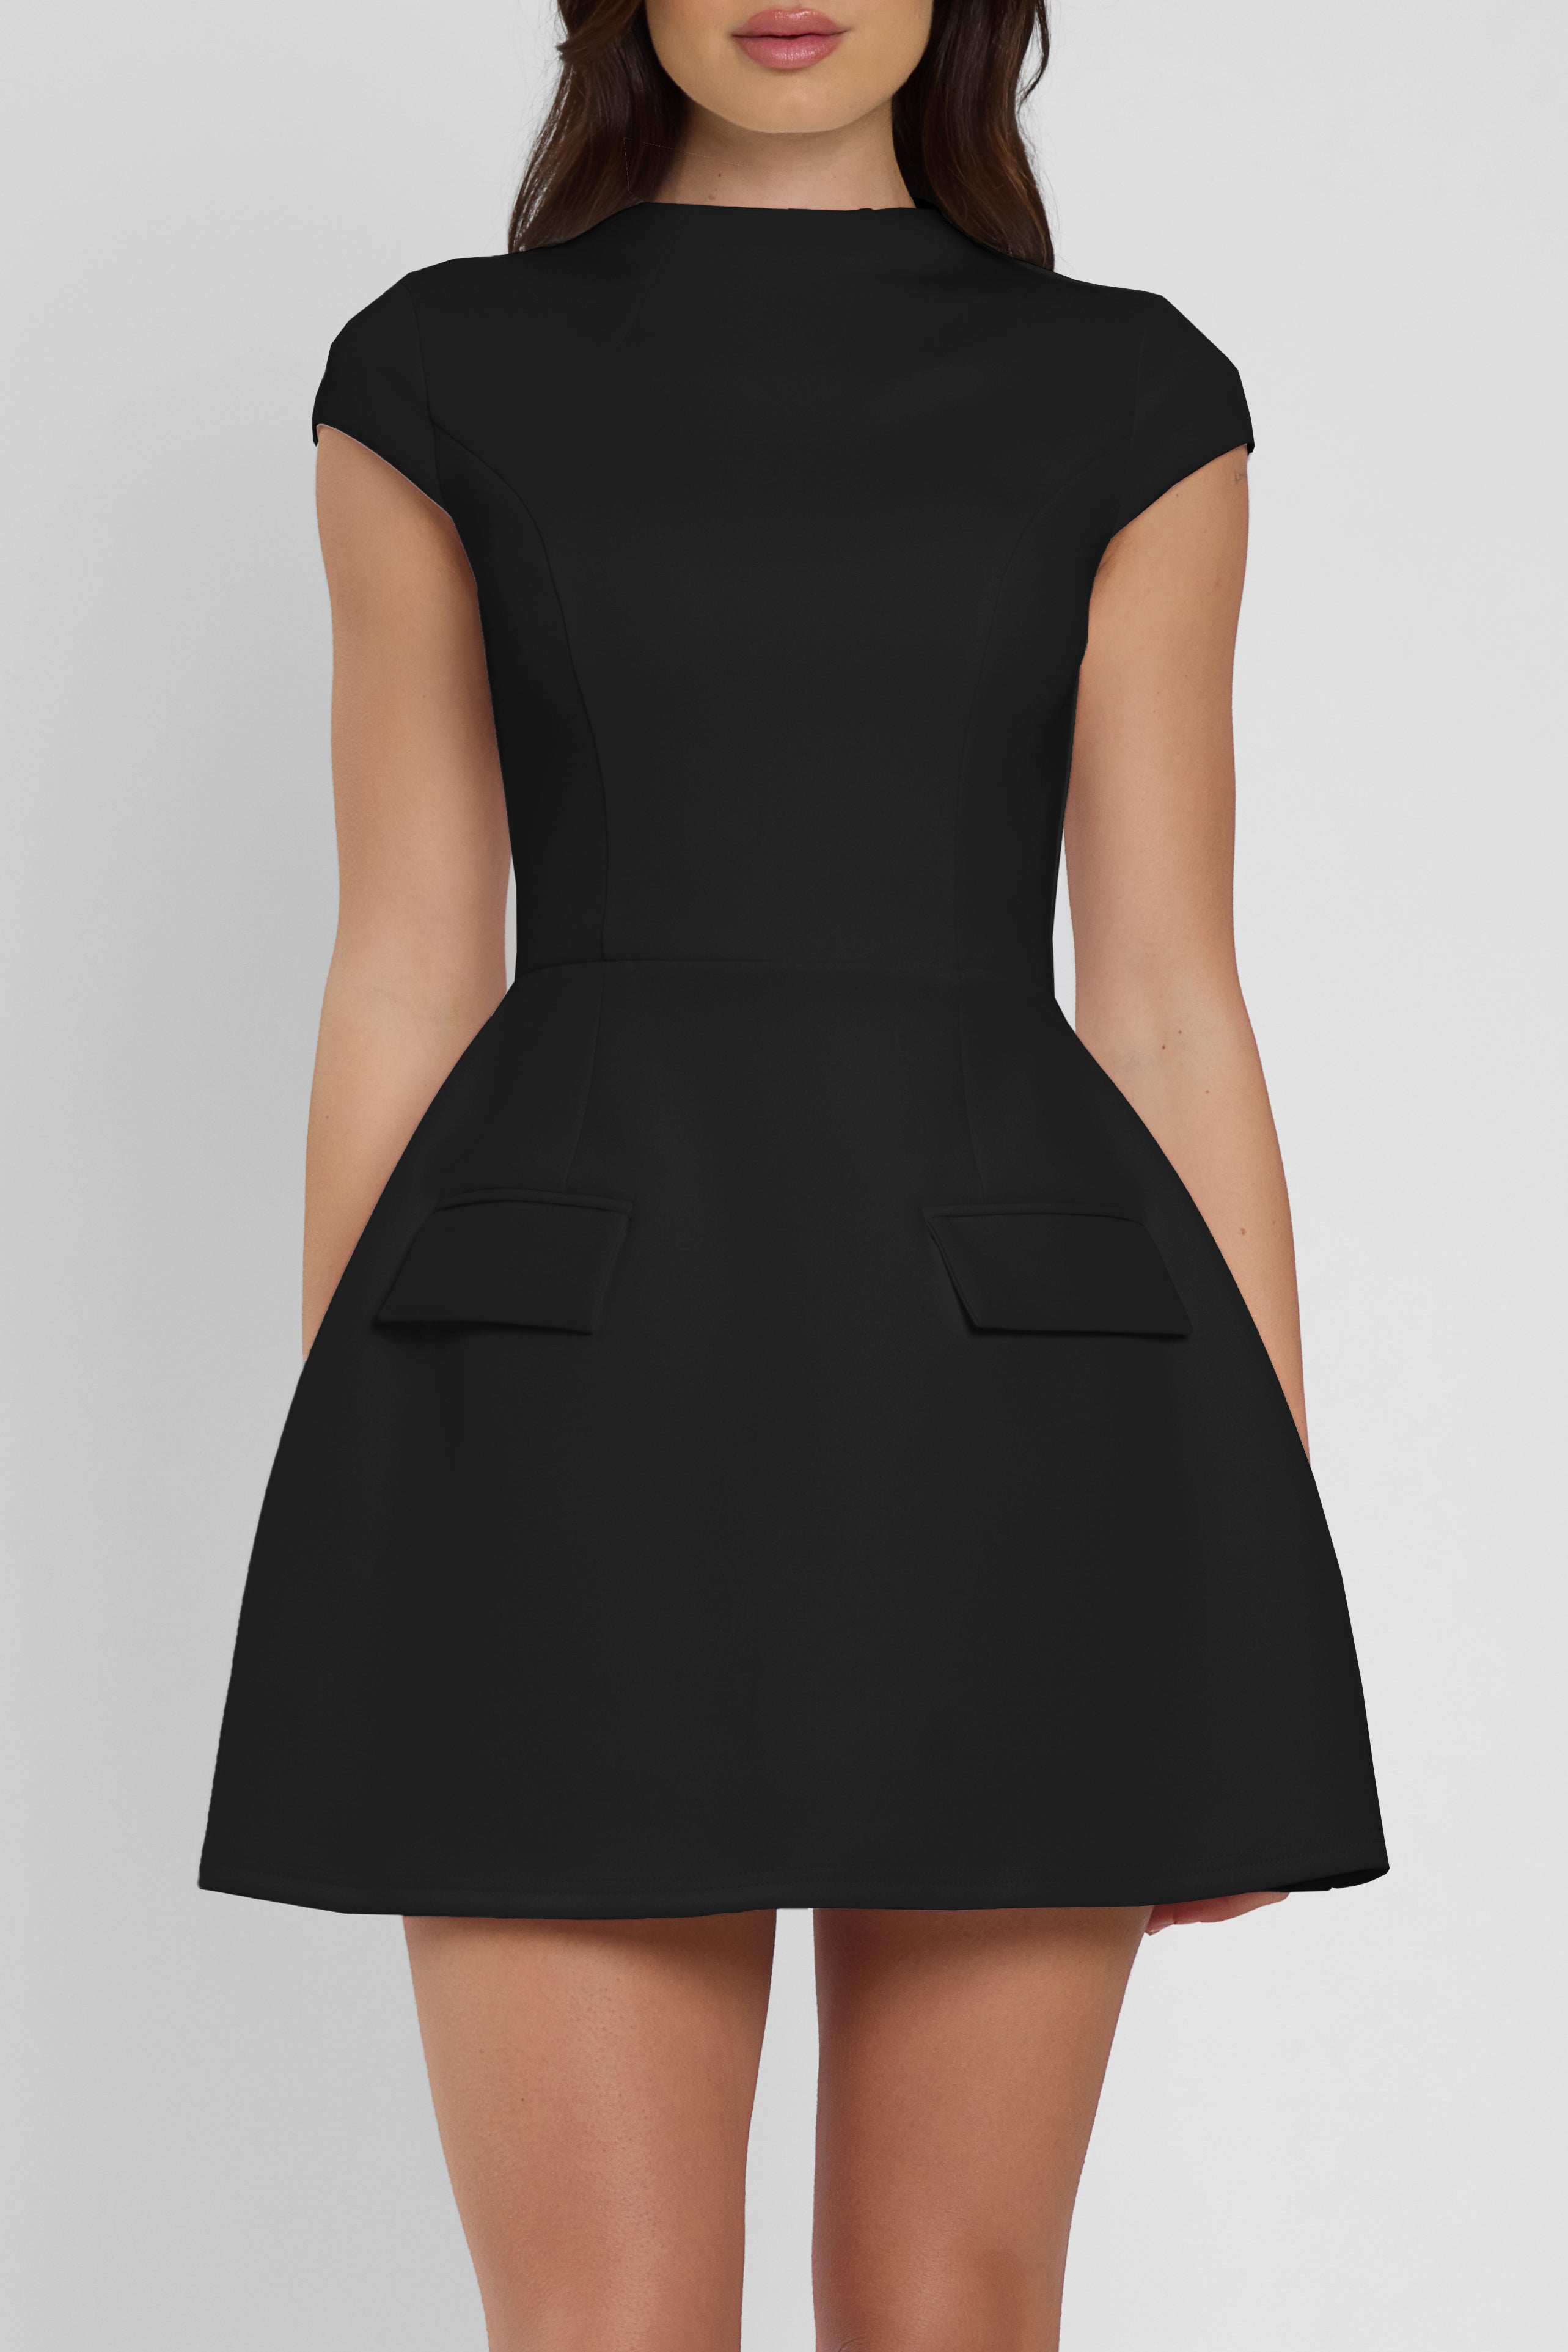 Cote Cap Sleeve Pocket Mini Dress - Black.